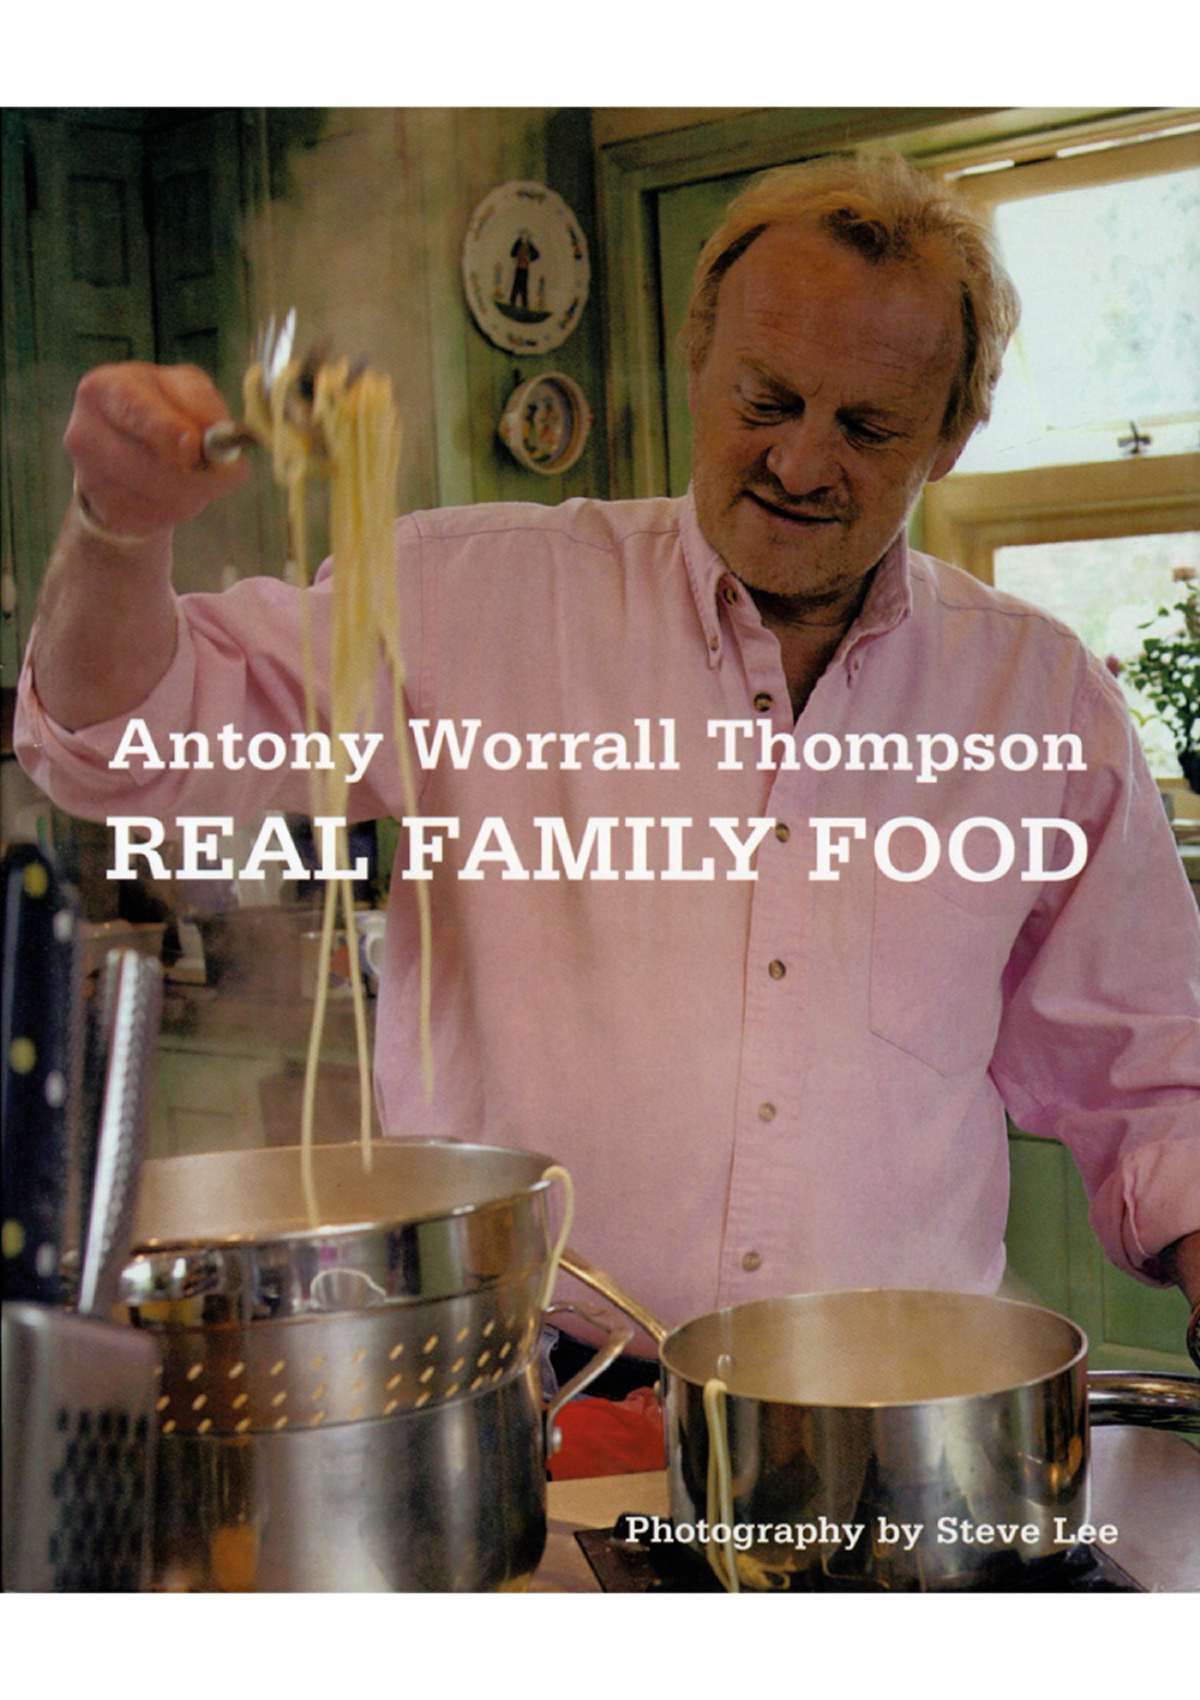 6656 - Antony Worrall Thomson, Real Family Food